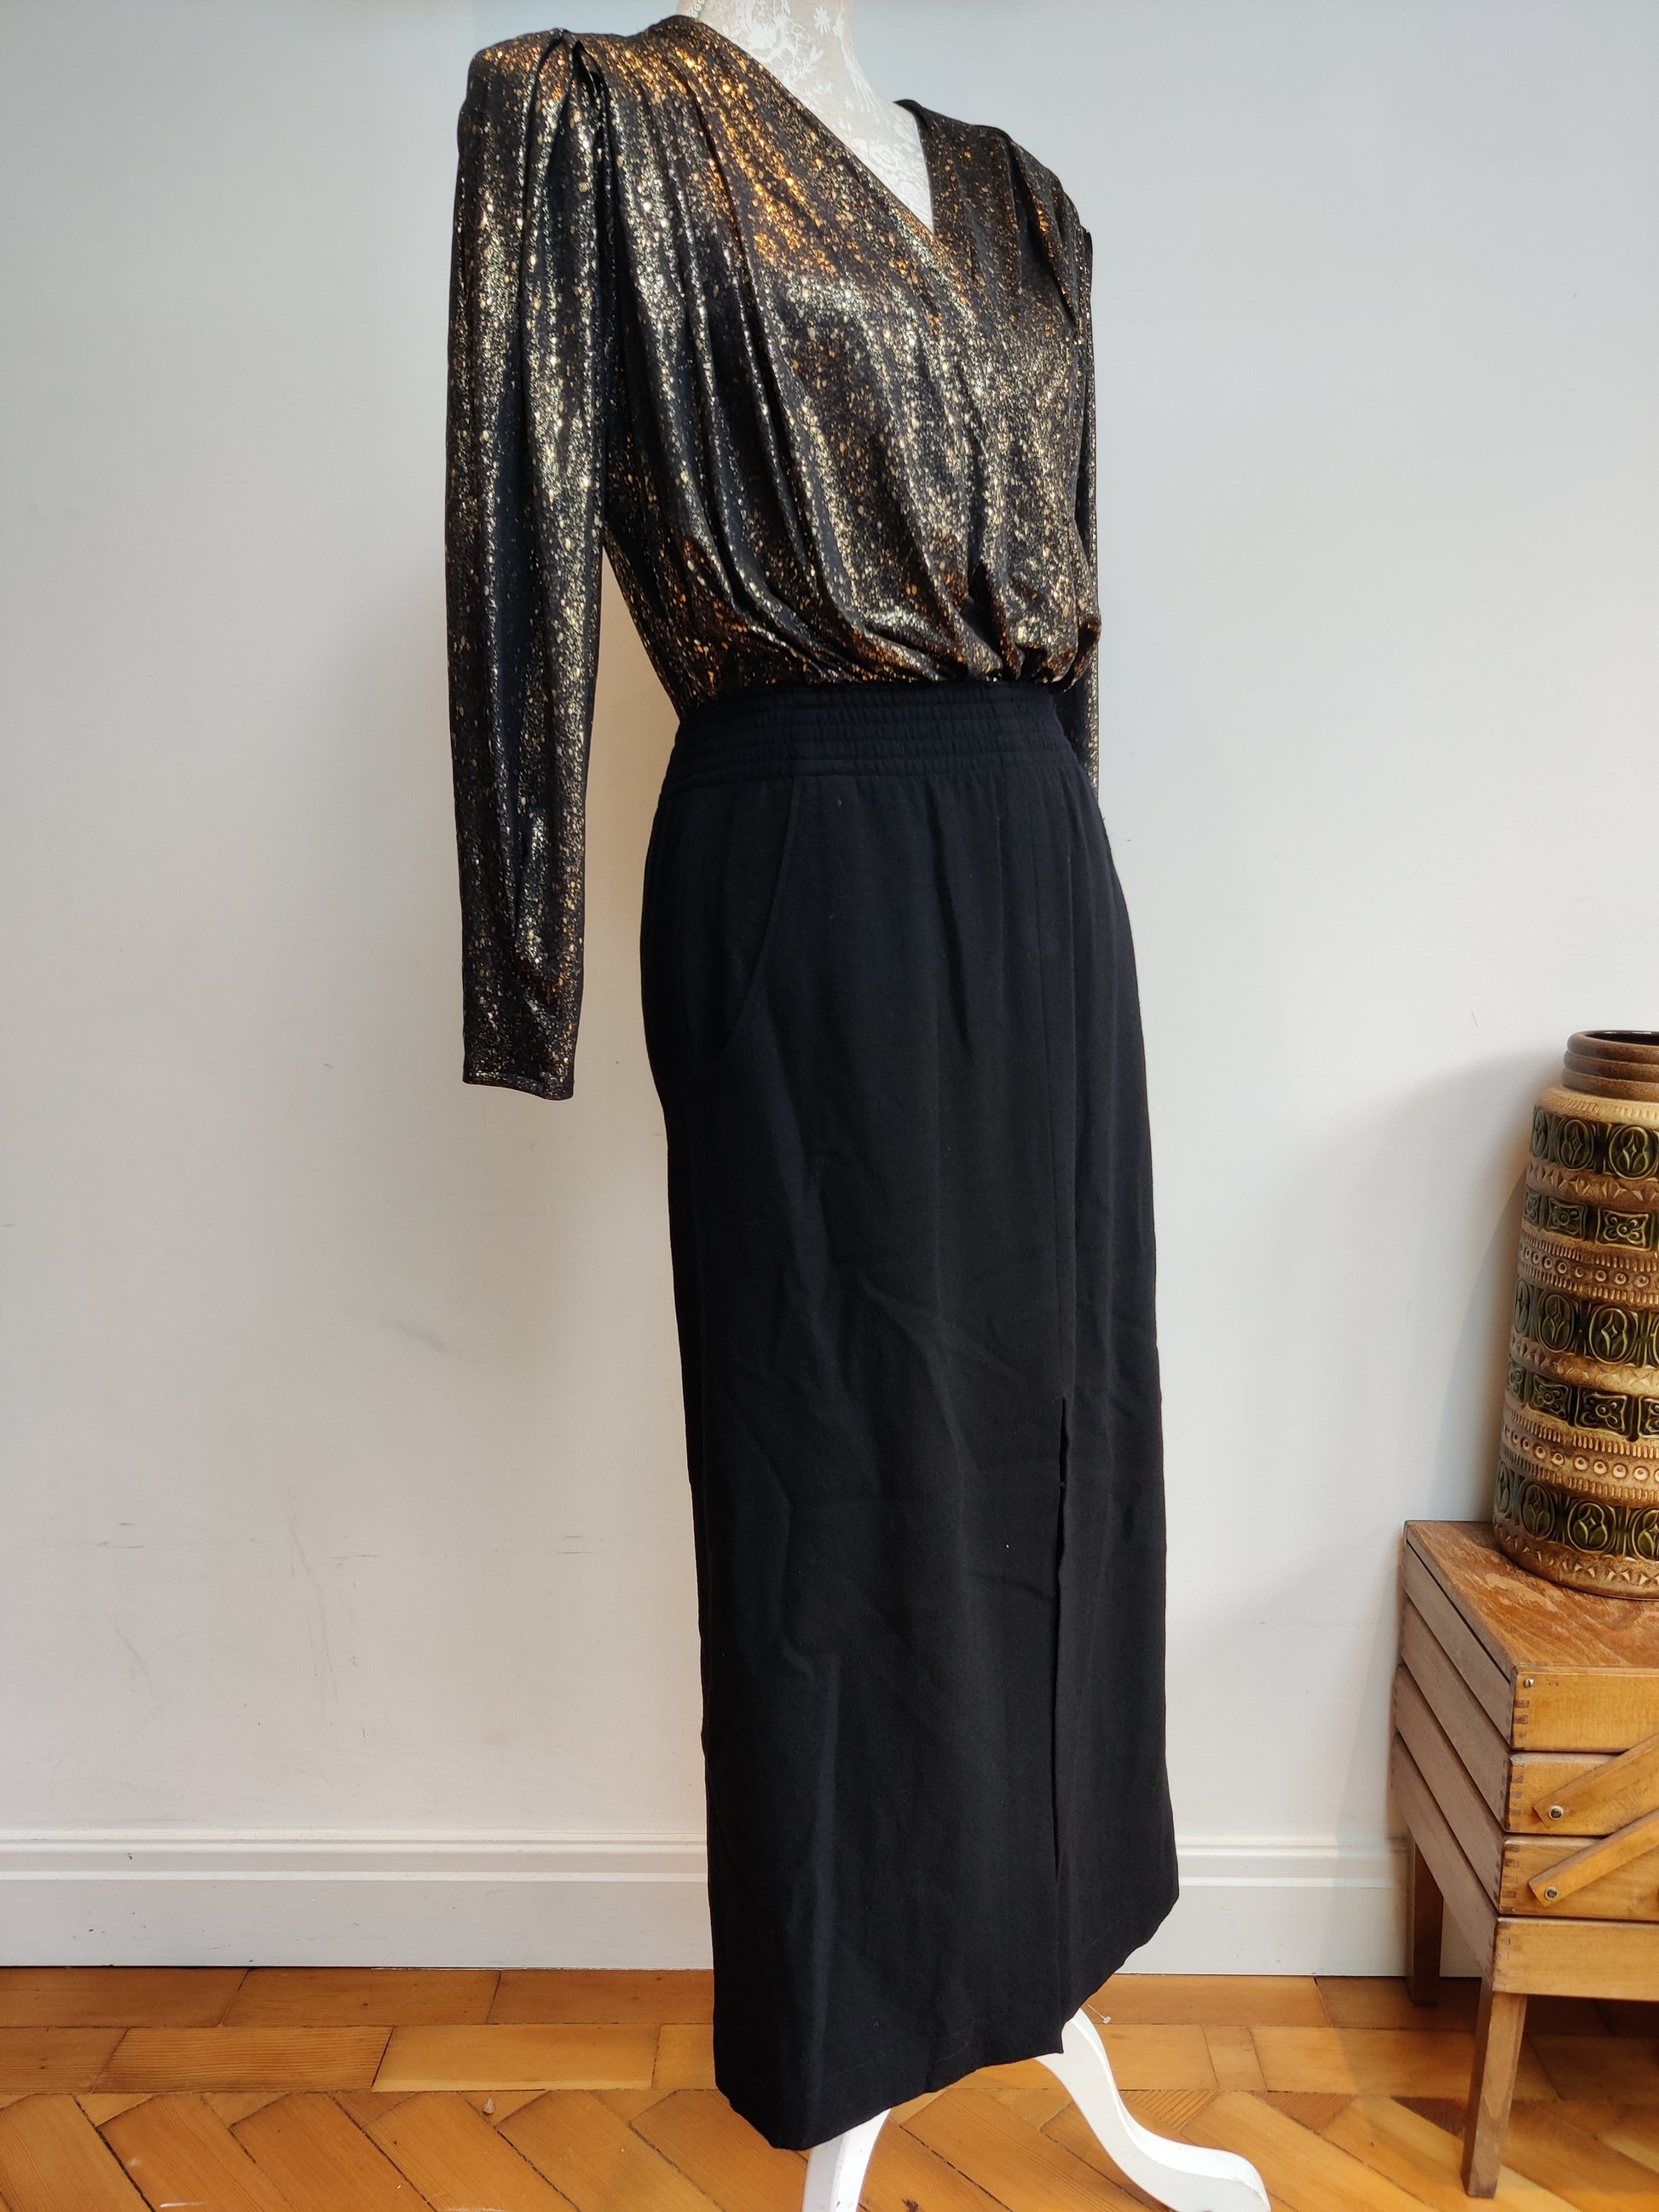 Vintage maxi skirt in black. 